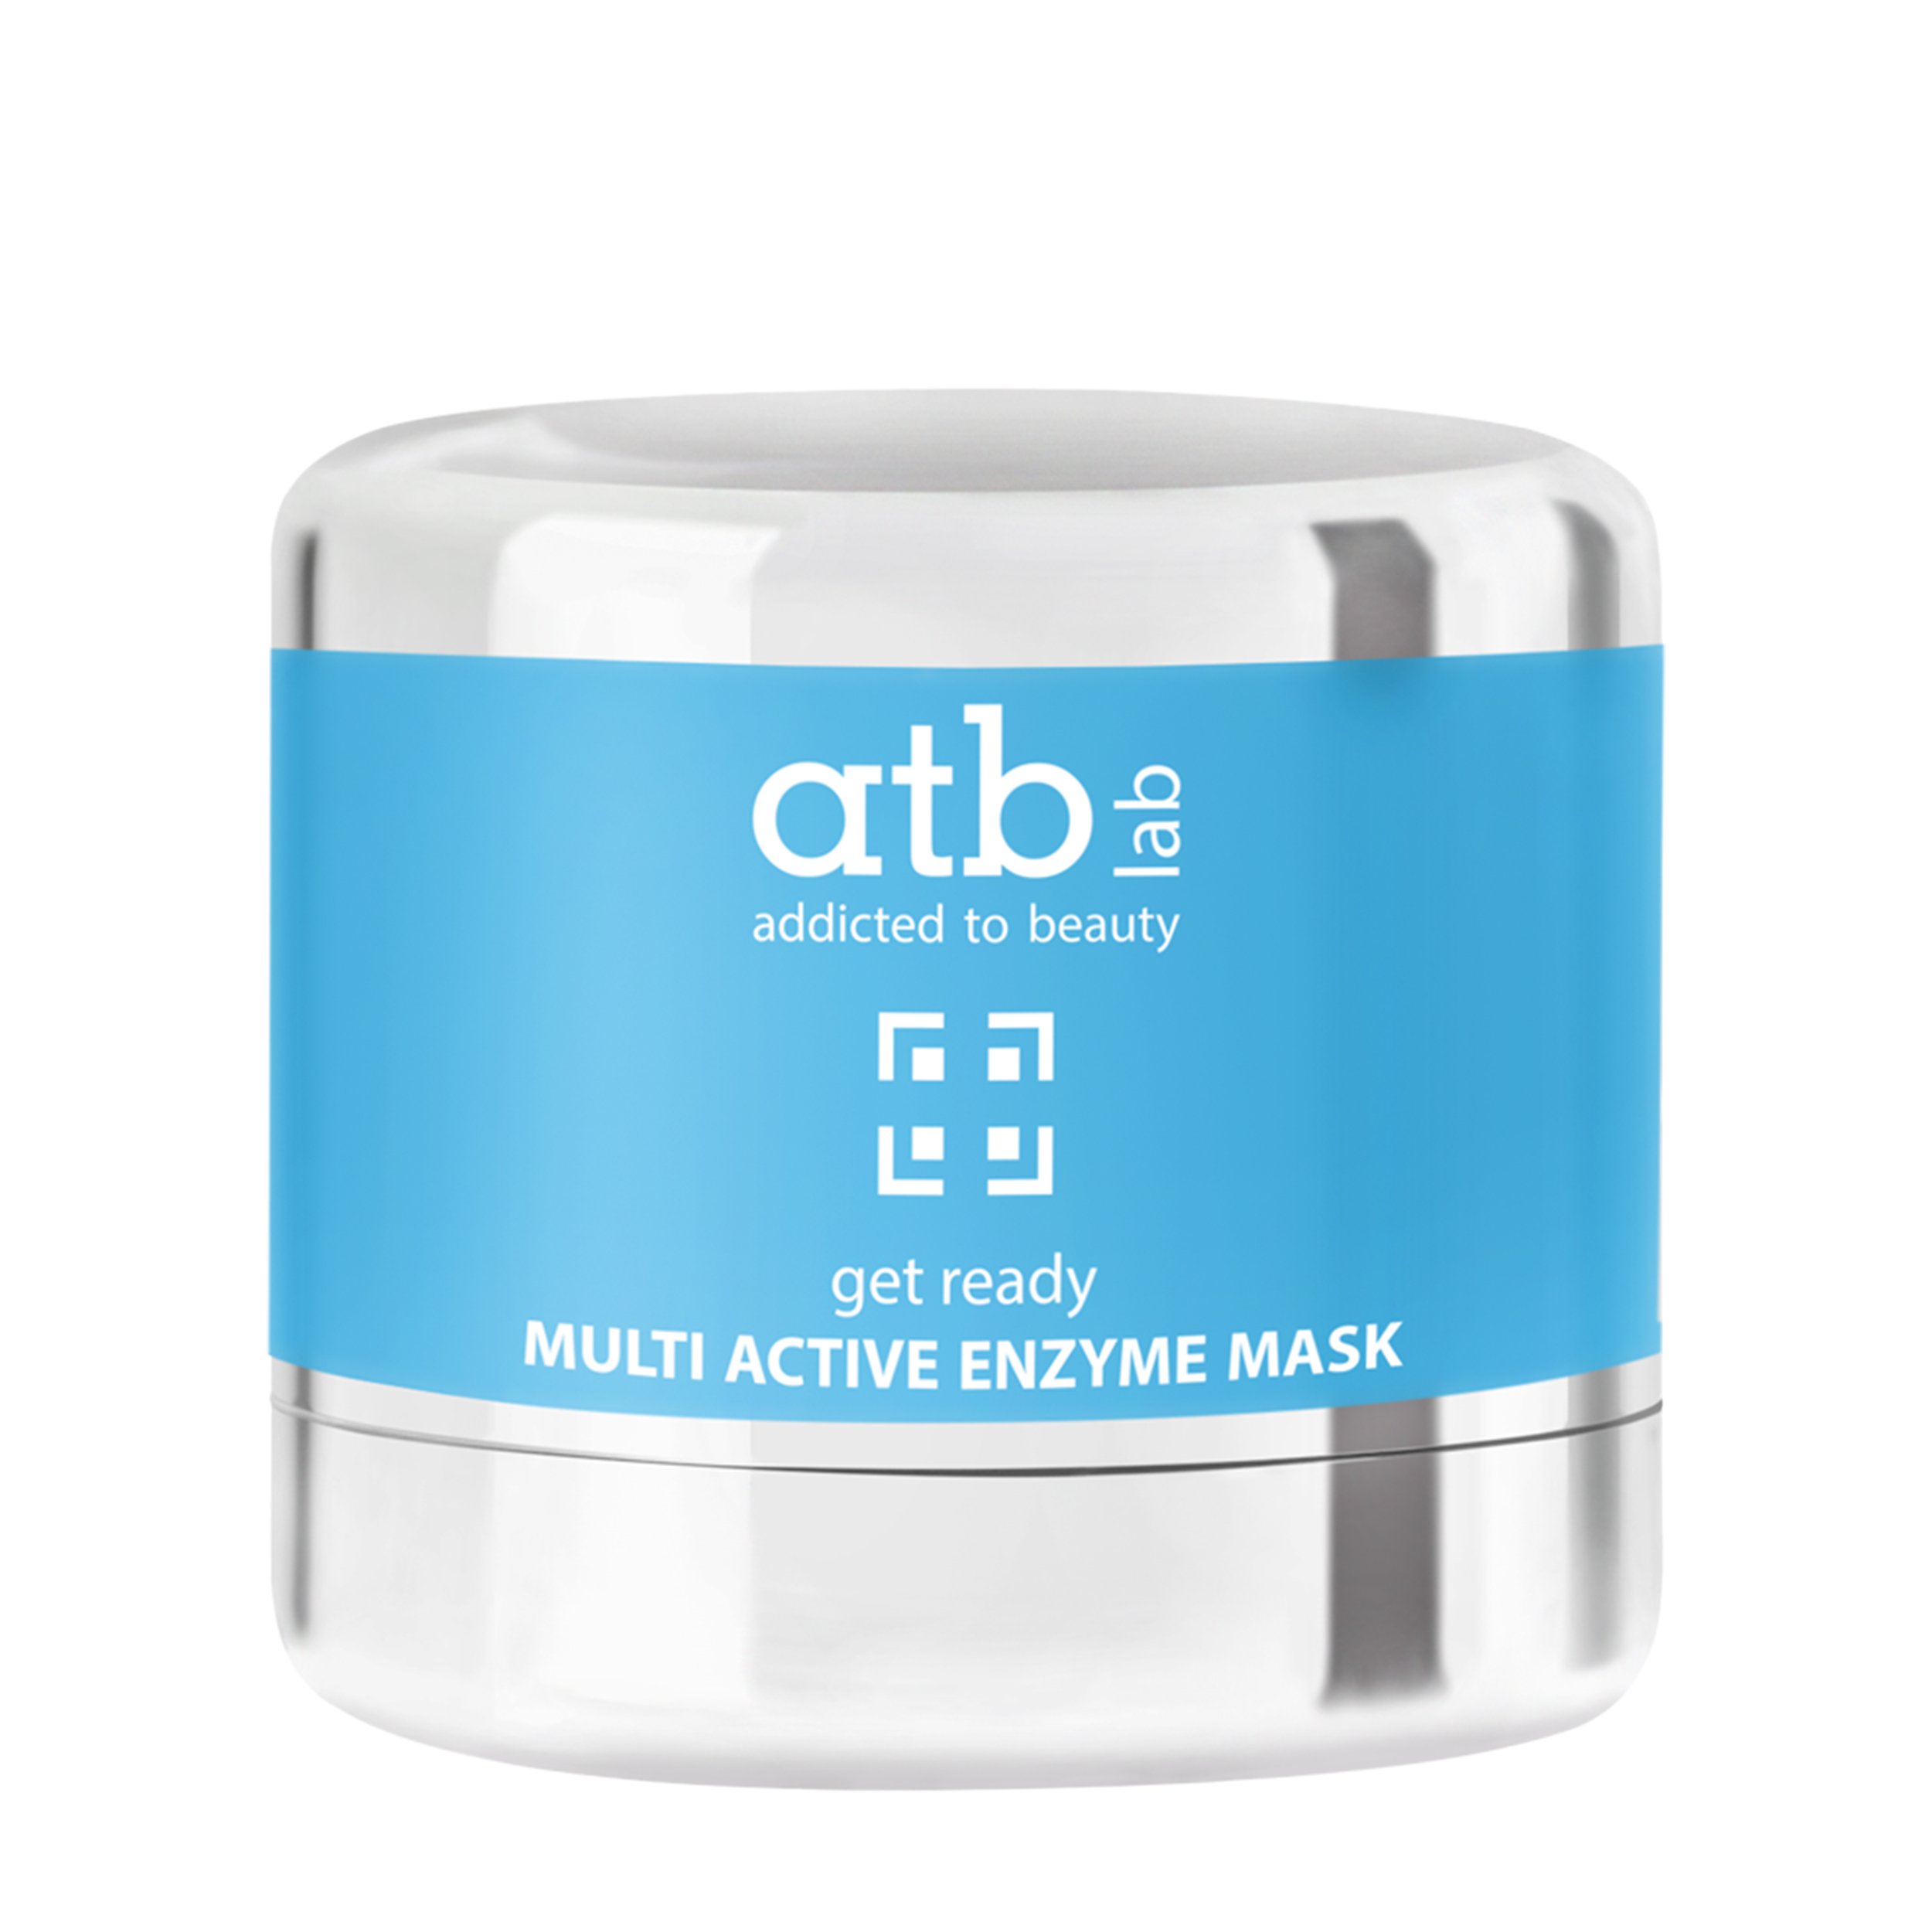 ATB lab ATB lab Мультиактивная энзимная маска для лица Get Ready 80 мл